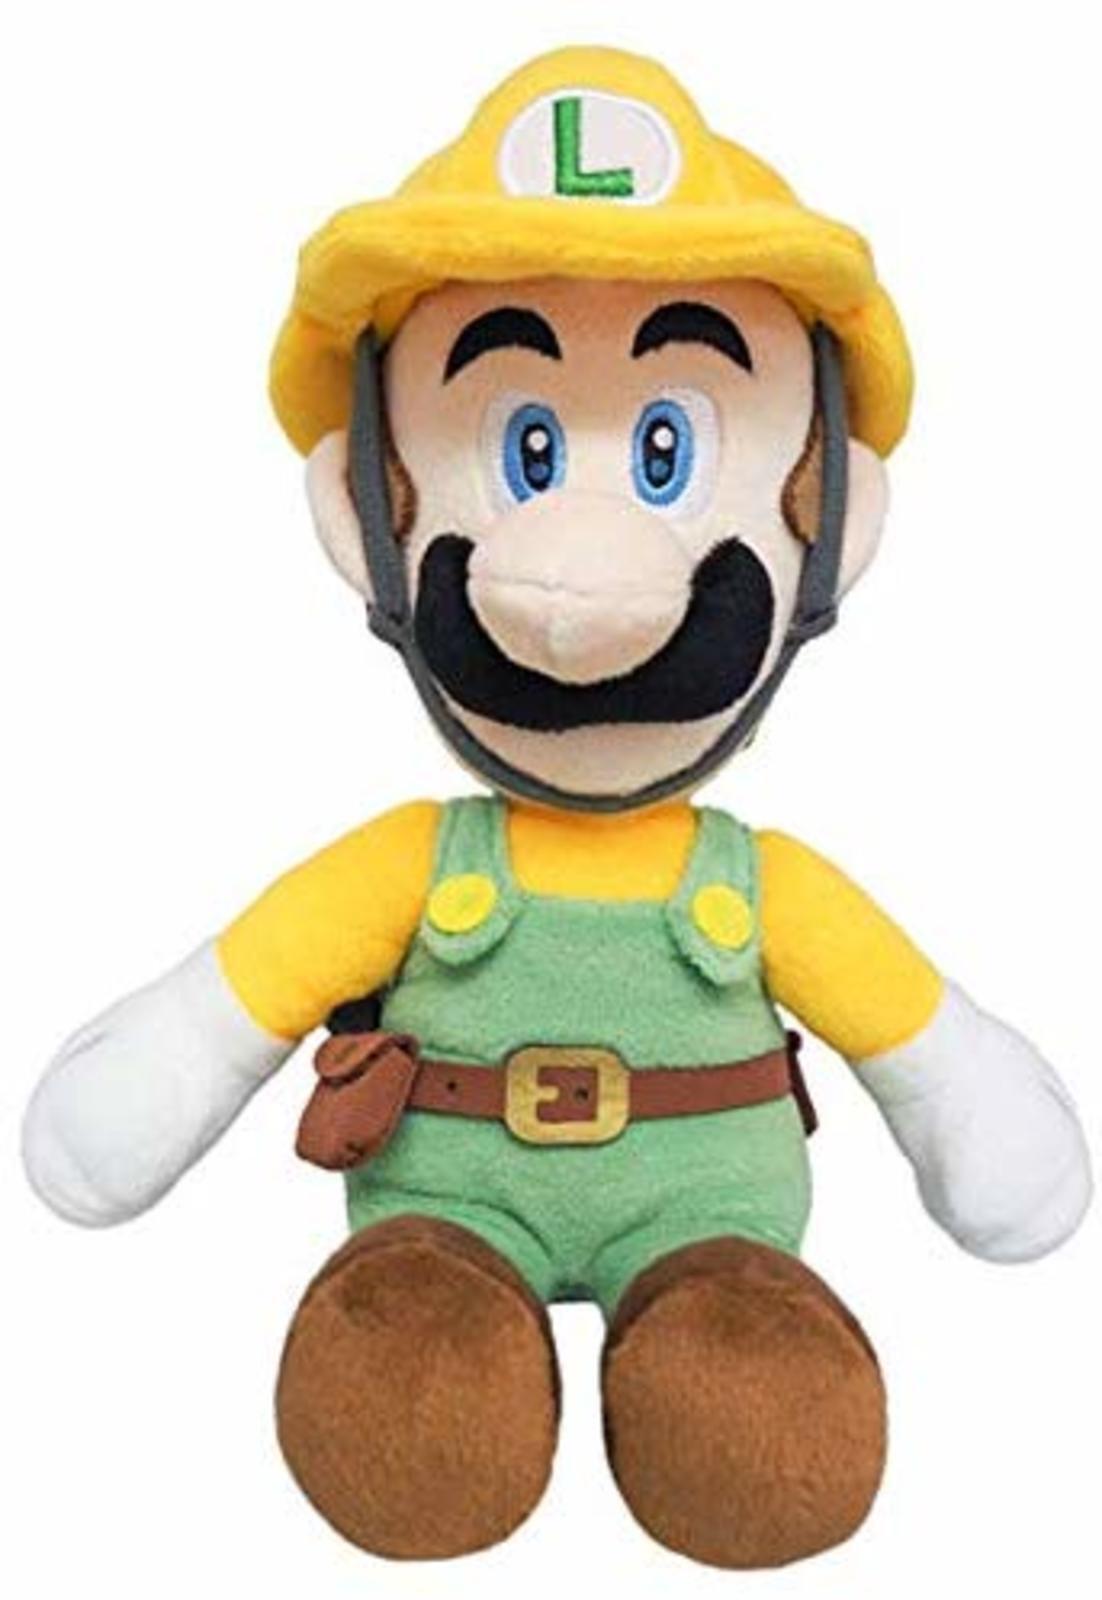 Super Mario Maker 2 Builder Luigi Plush Doll Stuffed Toy Size S F/S w/Tracking#